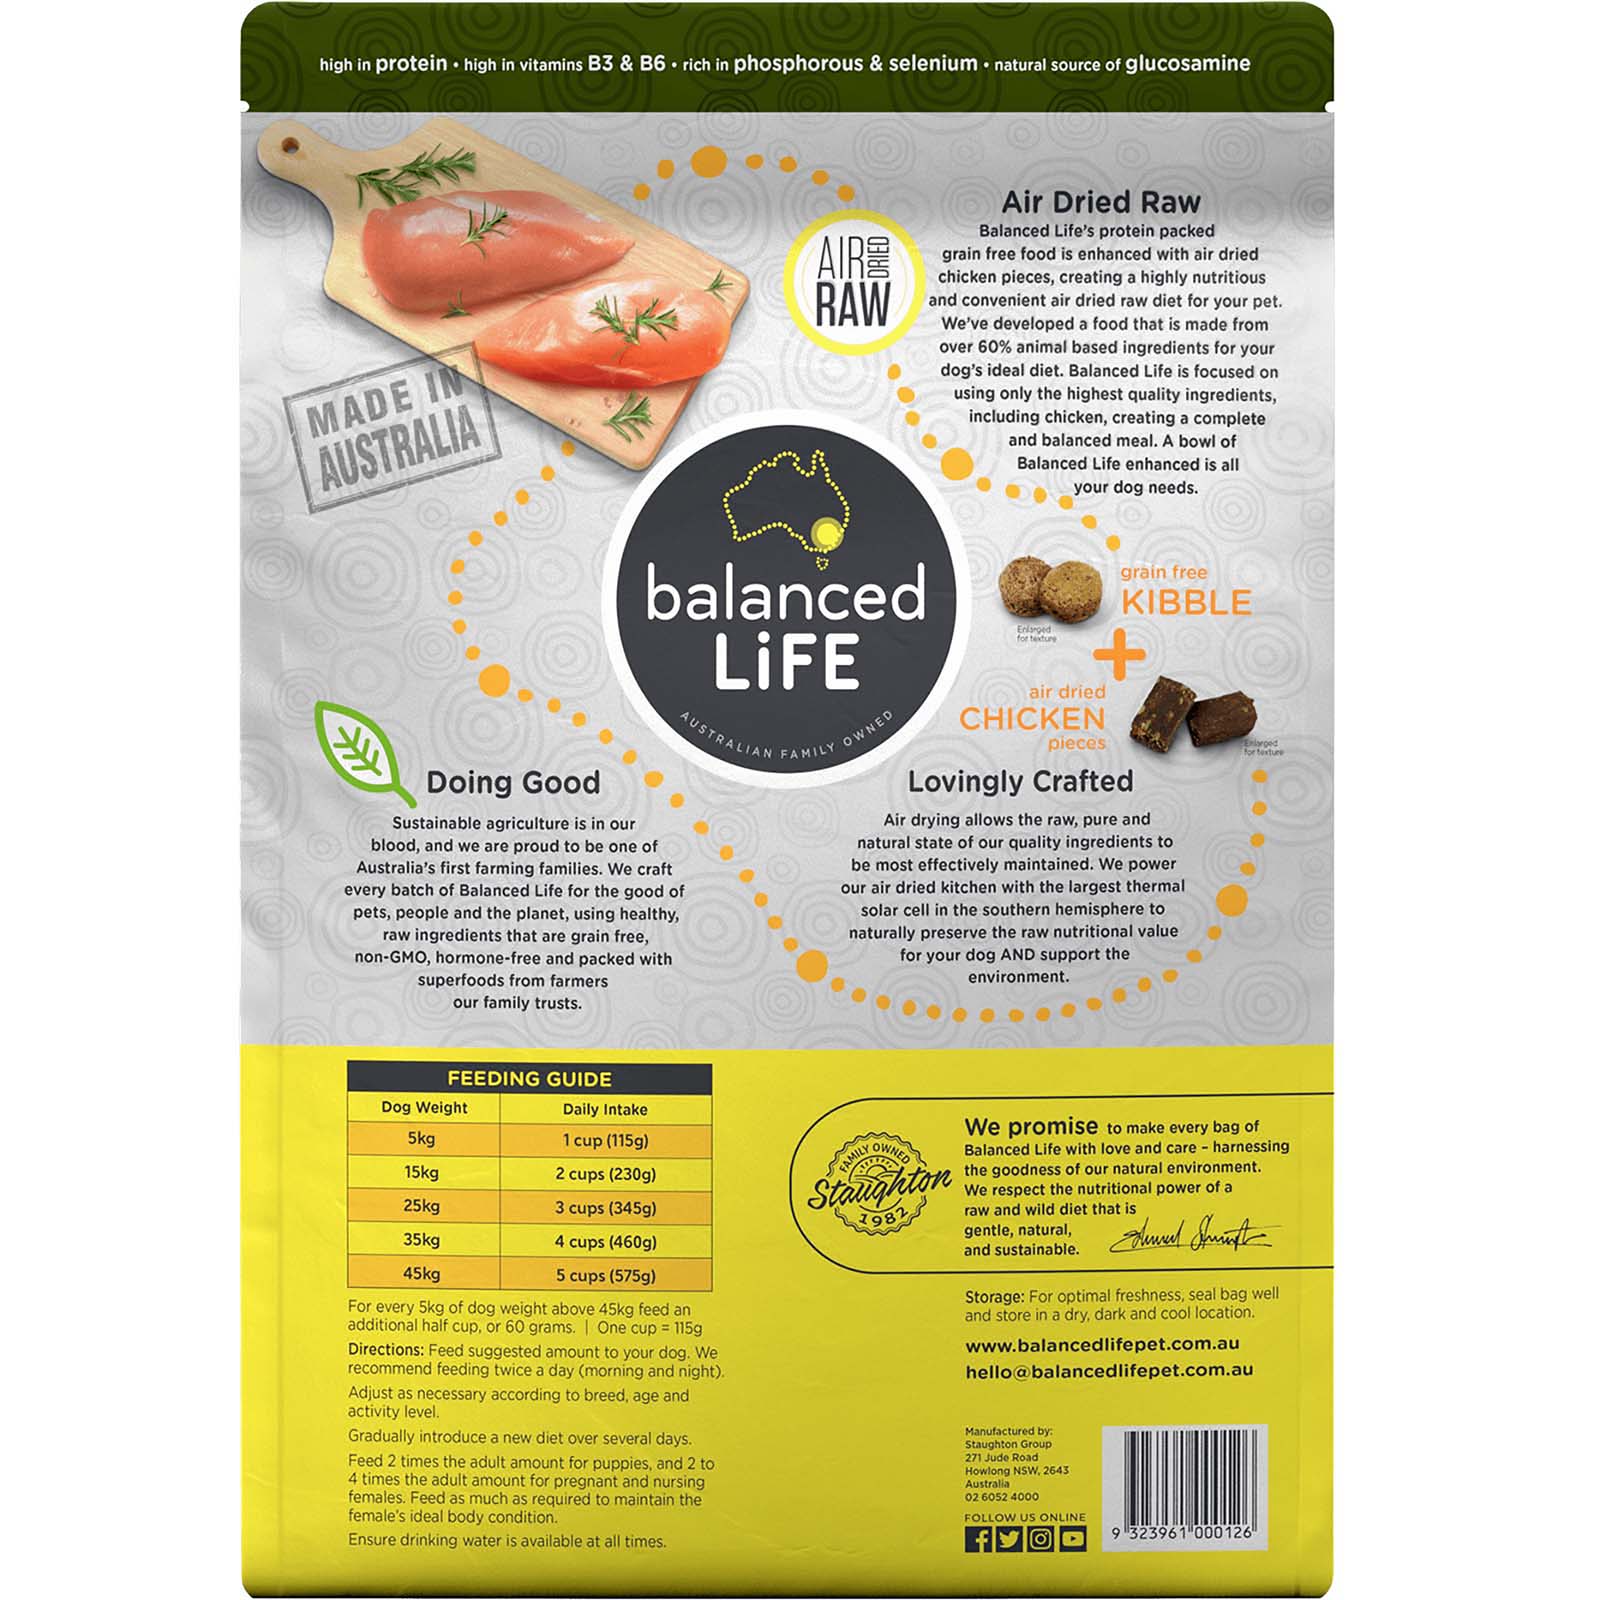 Balanced Life Enhanced Grain Free Kibble & Air-Dried Raw Dog Food - Chicken image 2